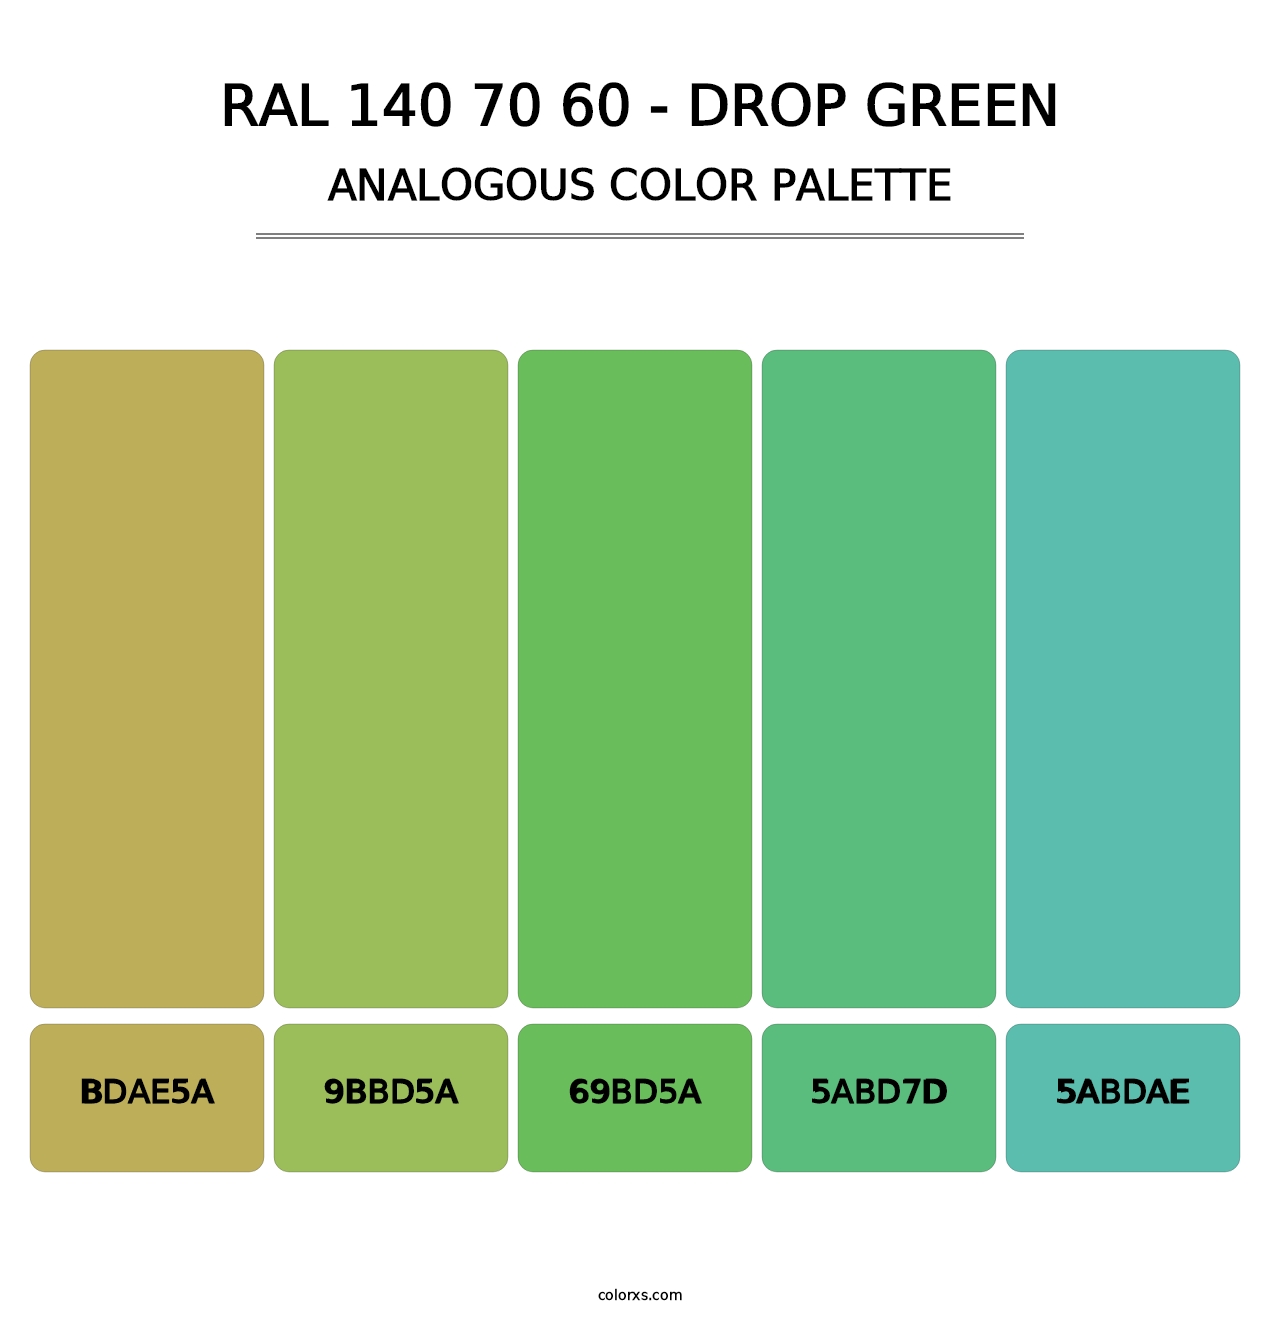 RAL 140 70 60 - Drop Green - Analogous Color Palette